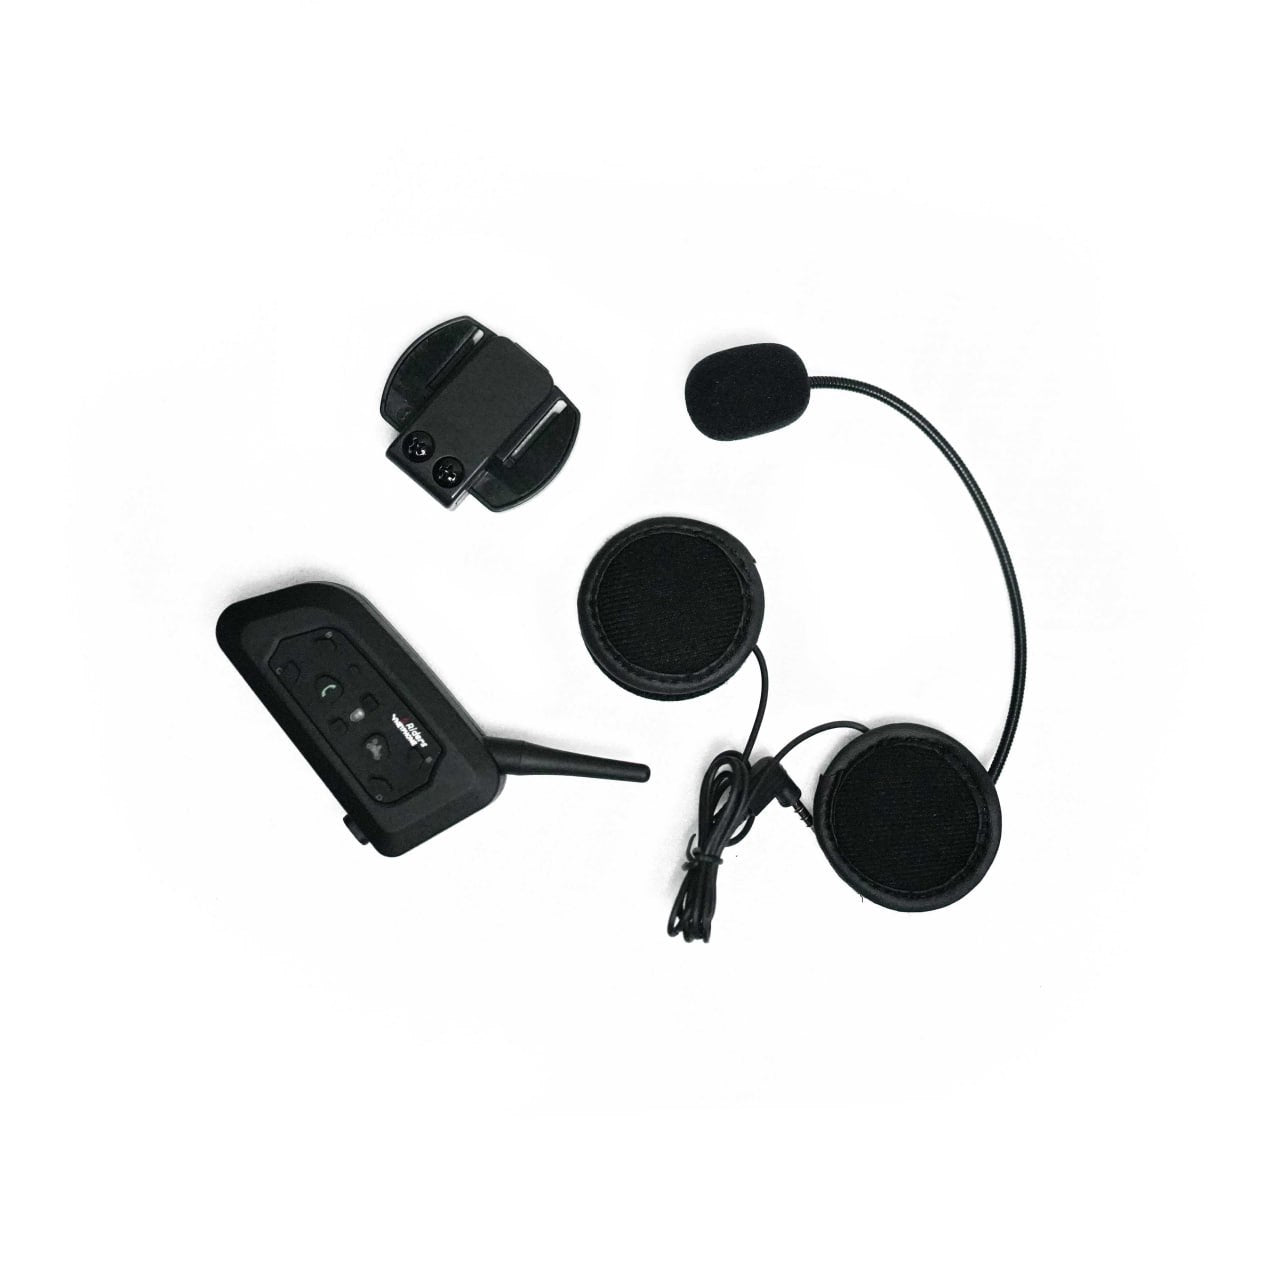 Vnetphone V6 Motorcycle Bluetooth Intercom Headset